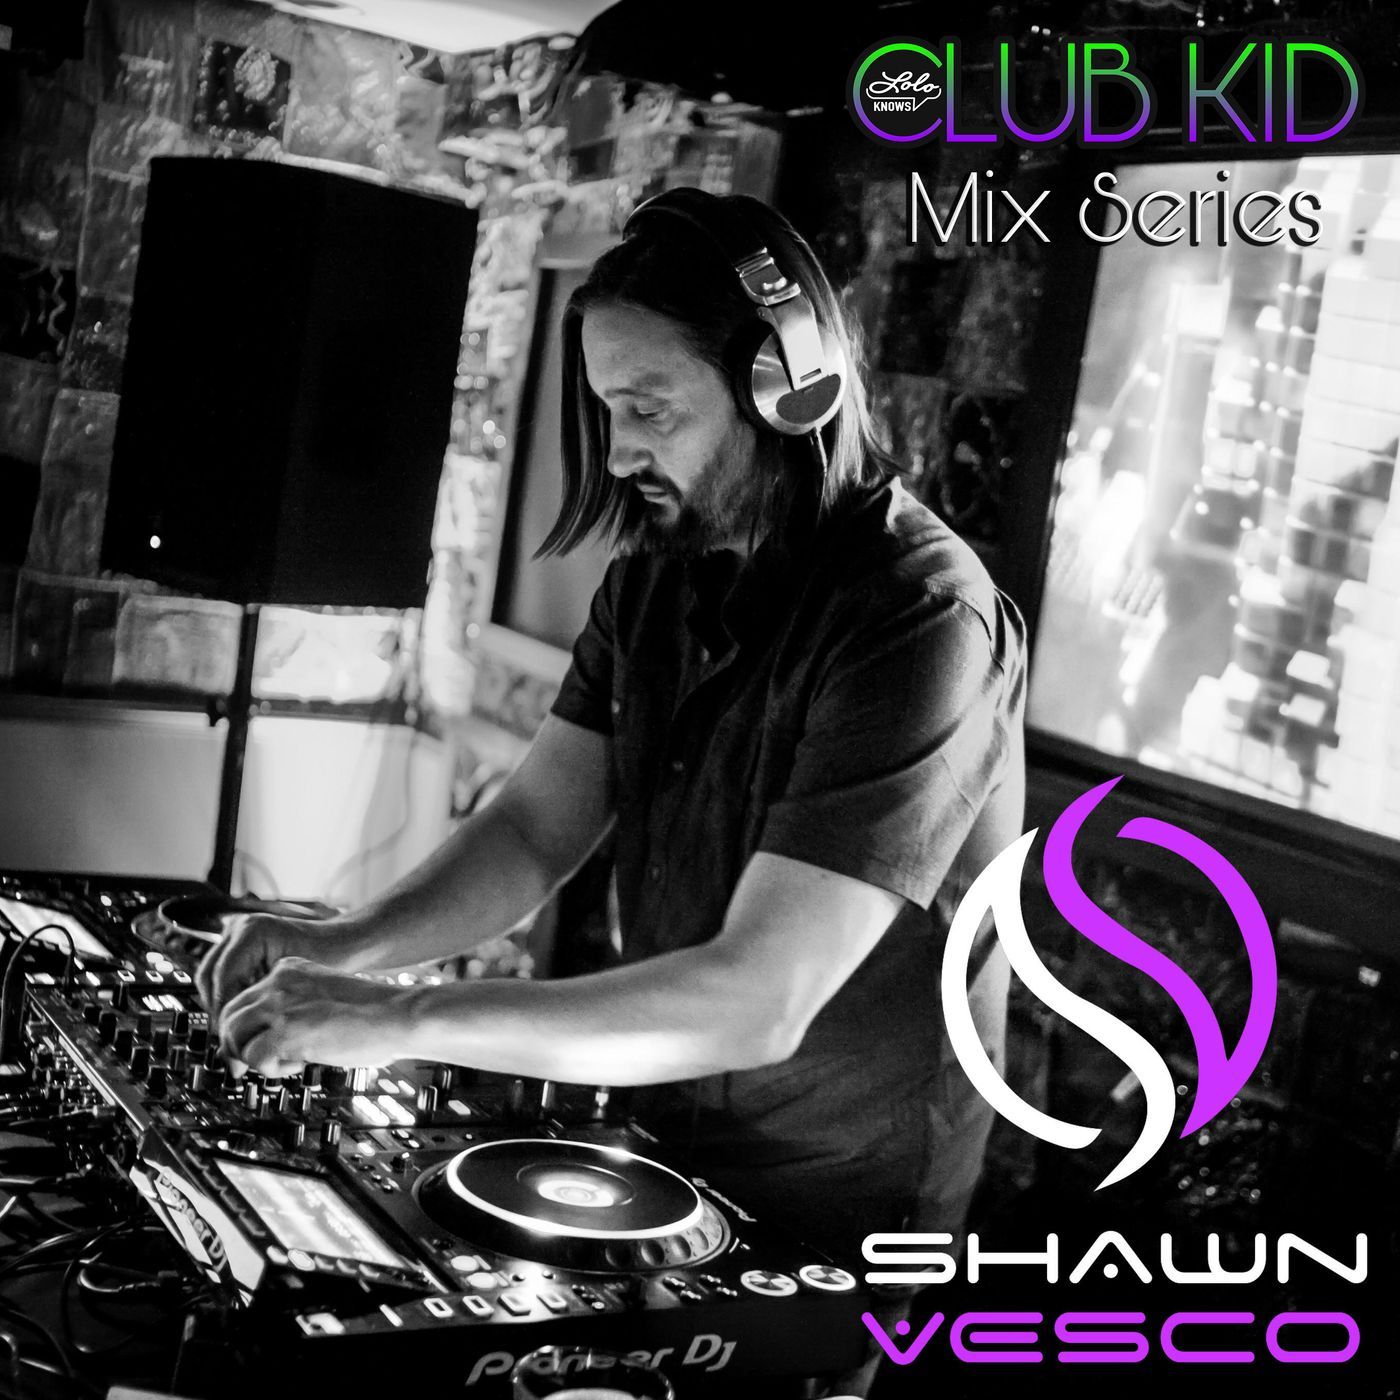 LOLO Knows Club Kid Mix Series... Shawn Vesco, Cleveland